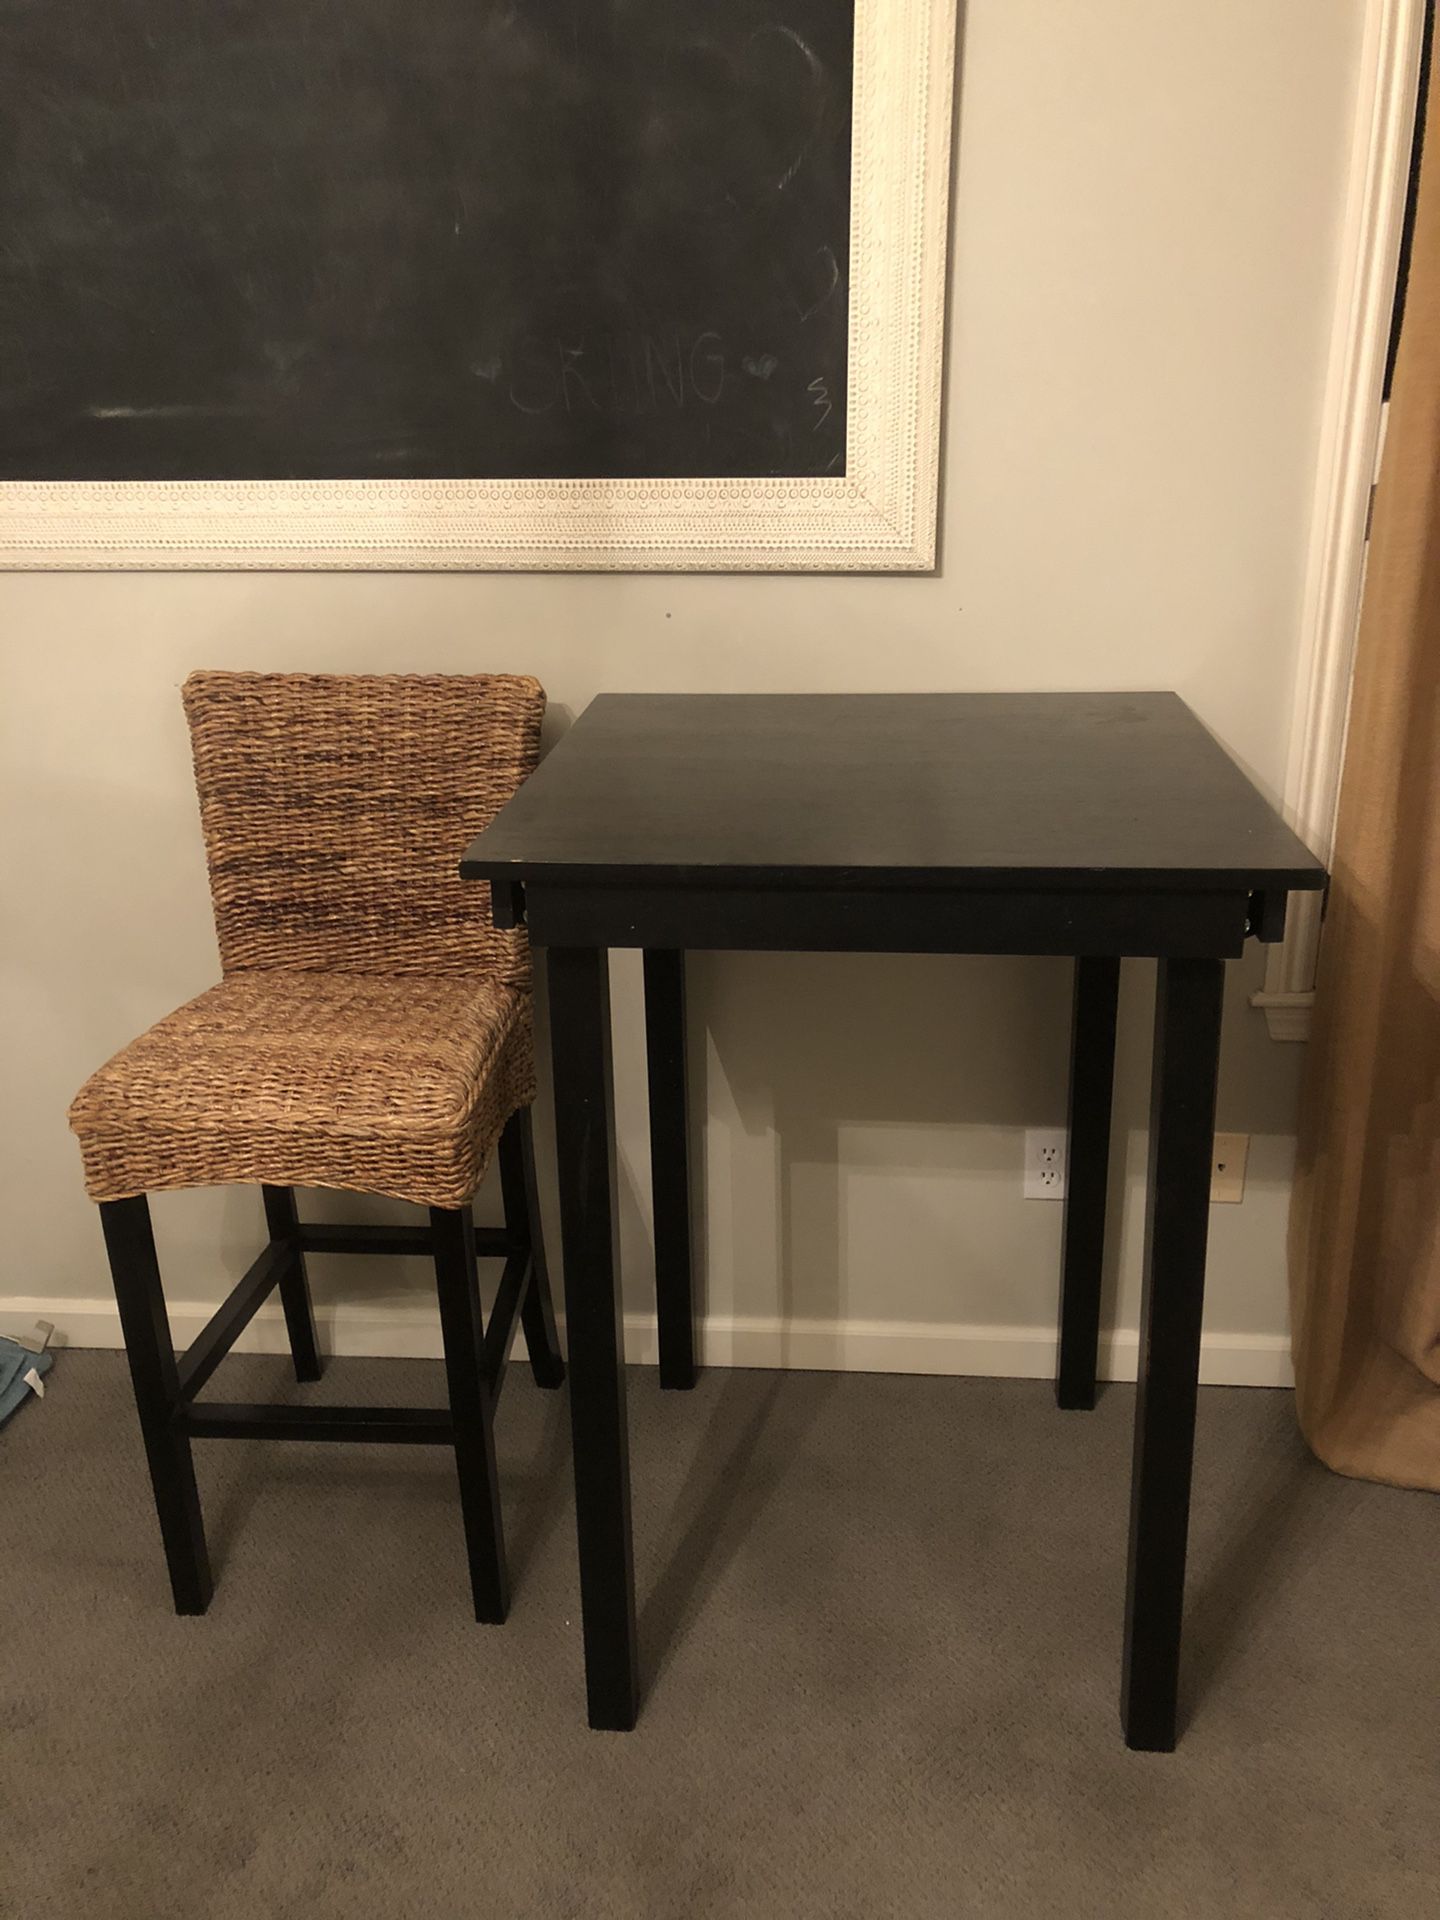 Standing desk/bar table and bar stool